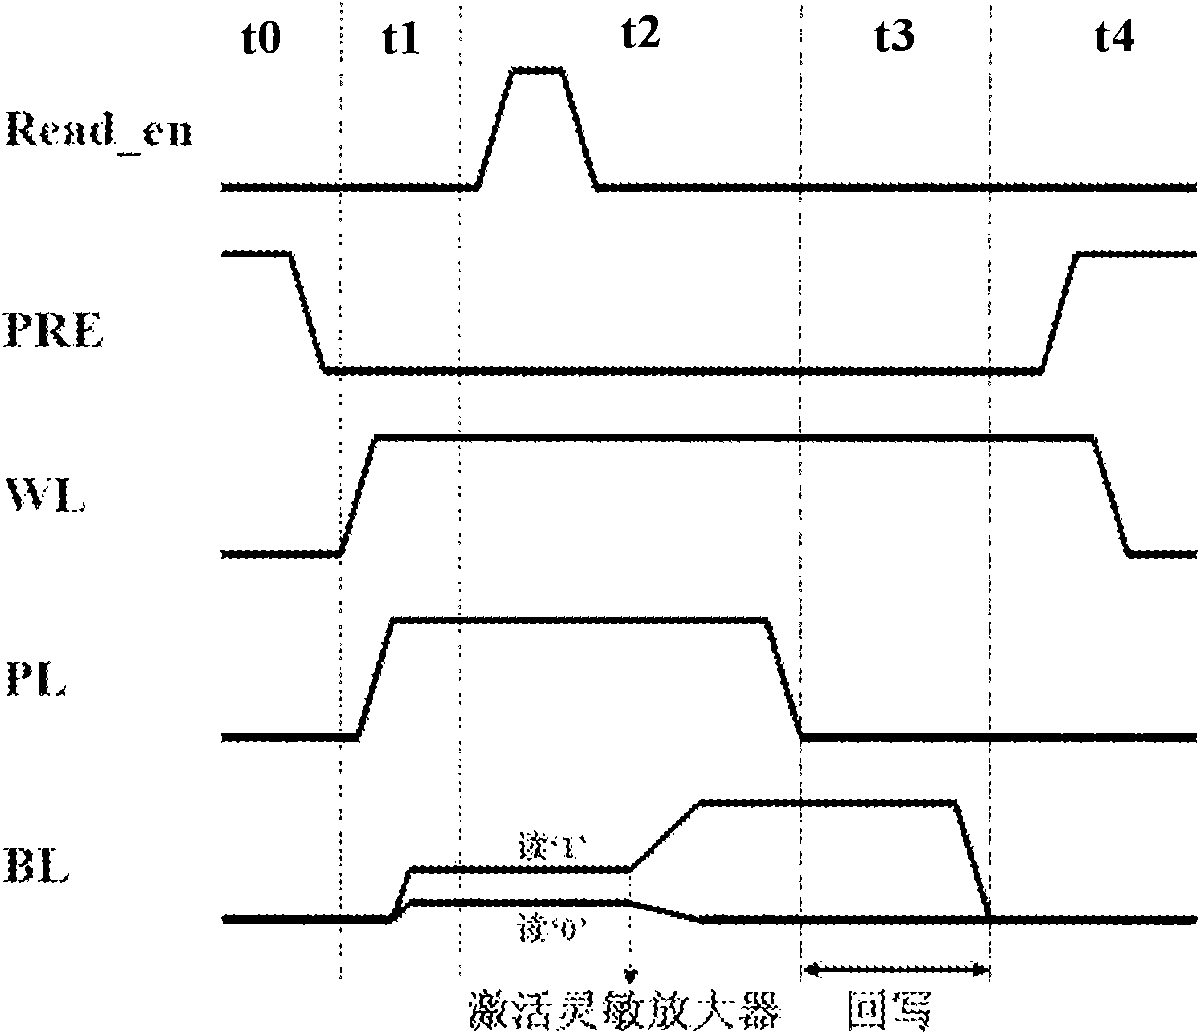 Single-tube single-capacitor type (1T1C) ferroelectric random access memory (FeRAM)